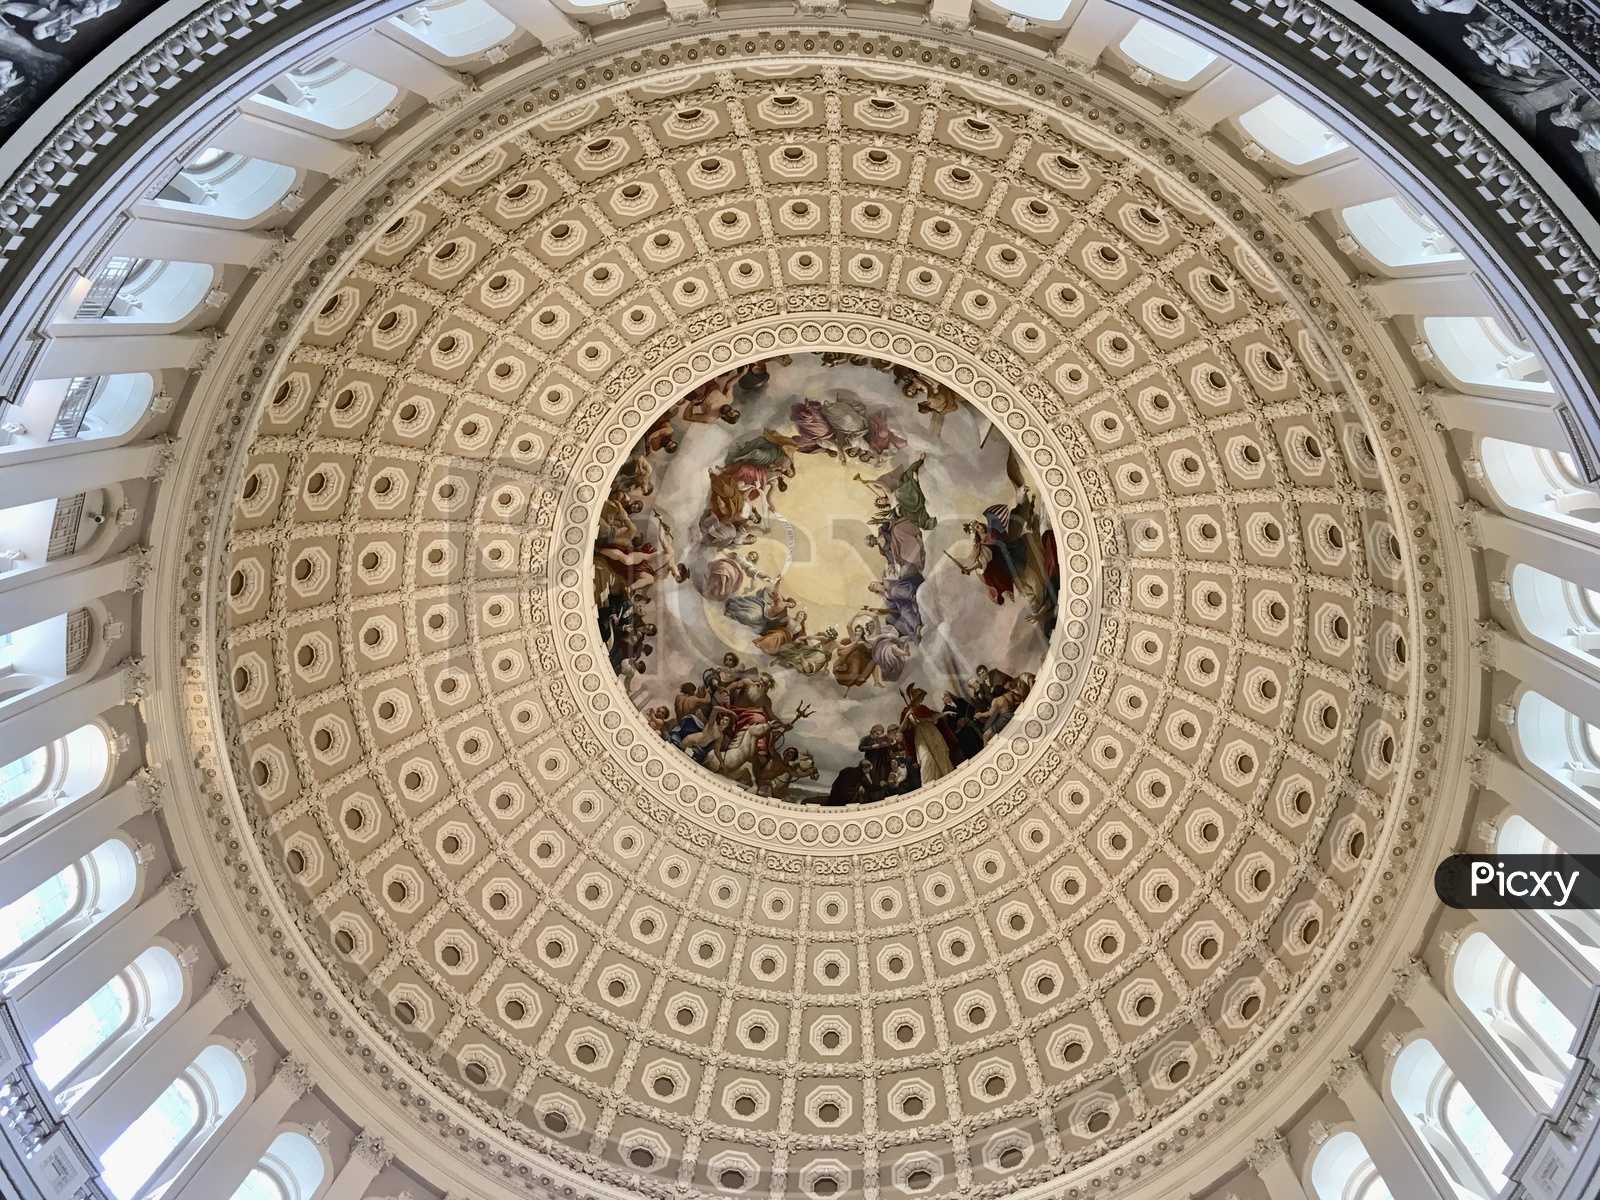 Rotunda, the center dome of US Capitol